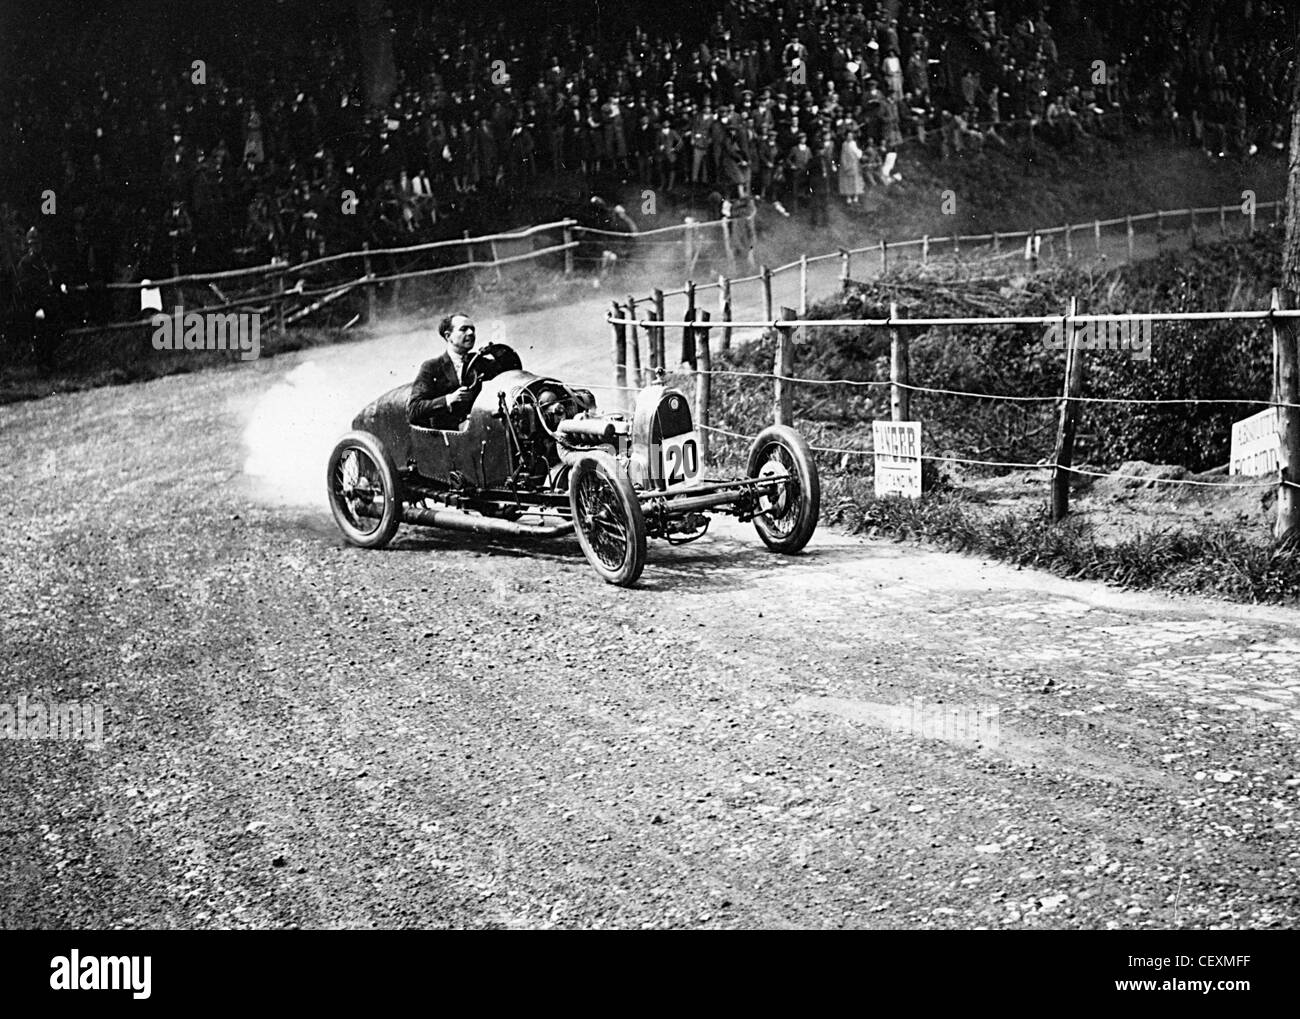 Raymond Mays in c.a. Motore sovralimentato a velocità durante Shelsley Walsh 1925 evento Foto Stock